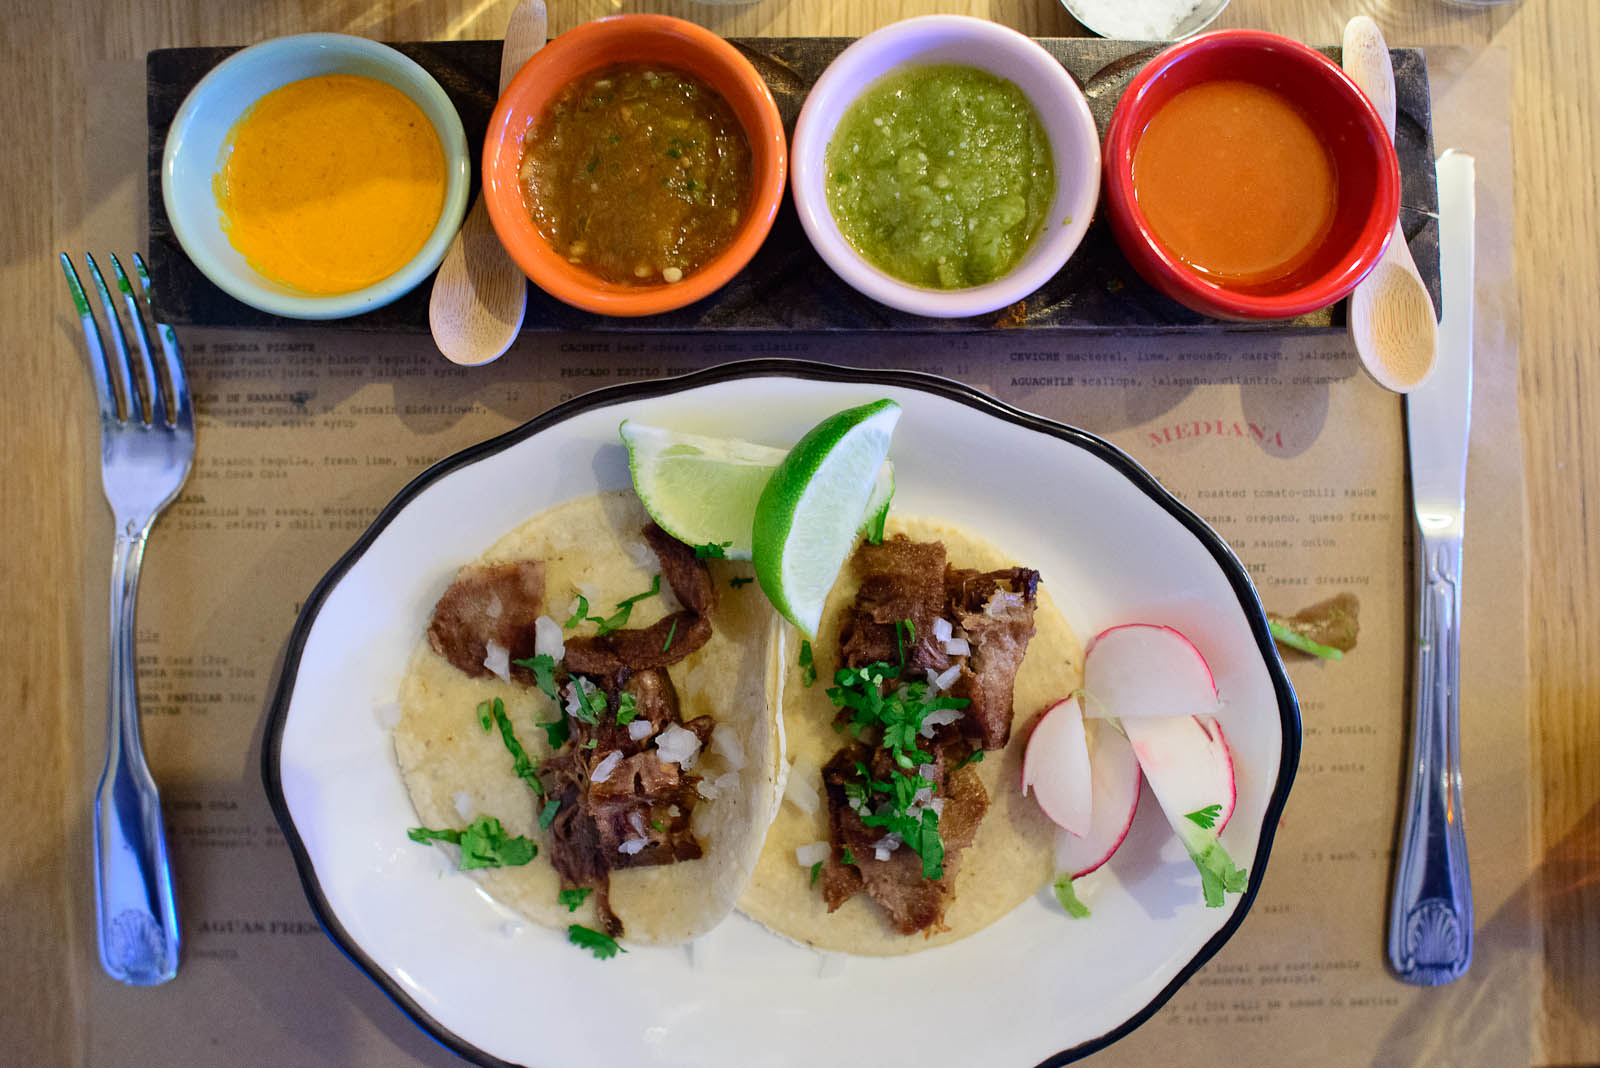 Tacos de lengua (tongue), onion, cilantro, radish with salsas (s